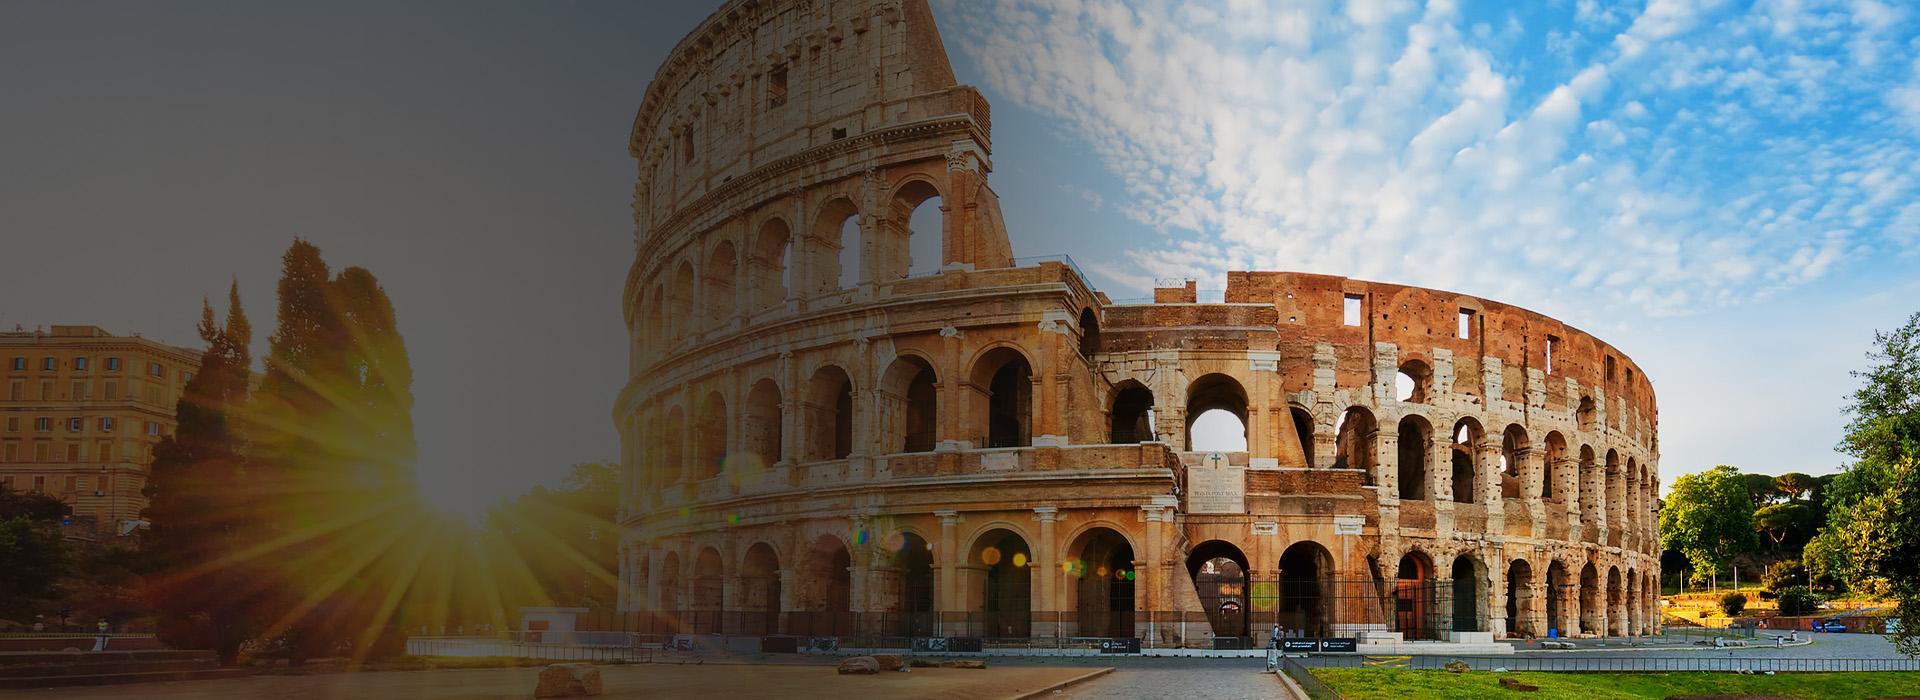 Slajd 1 - Koloseum